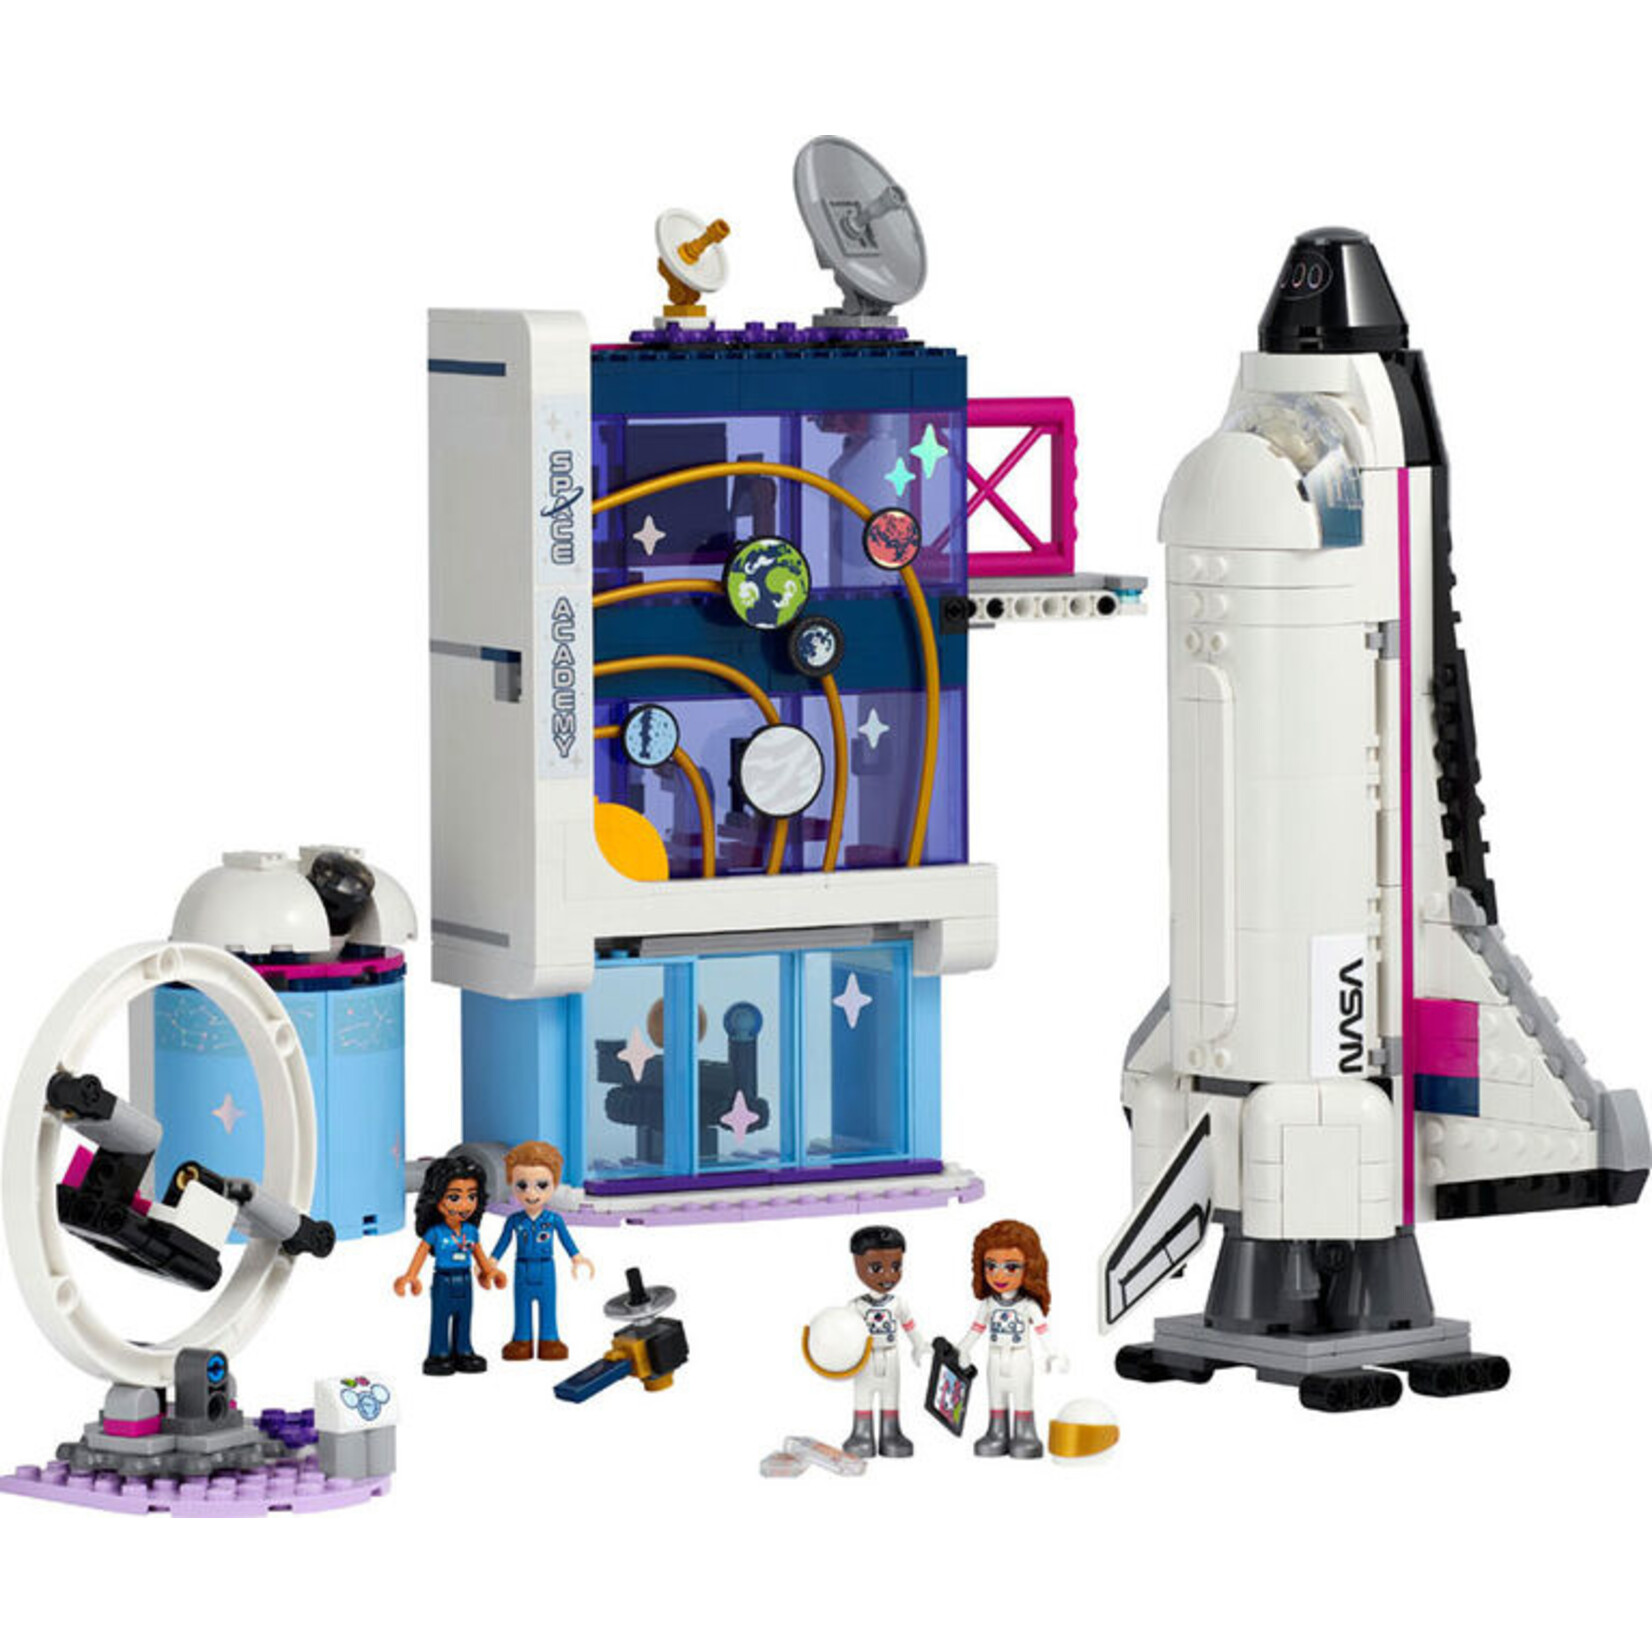 LEGO Friends - olivia's space academy